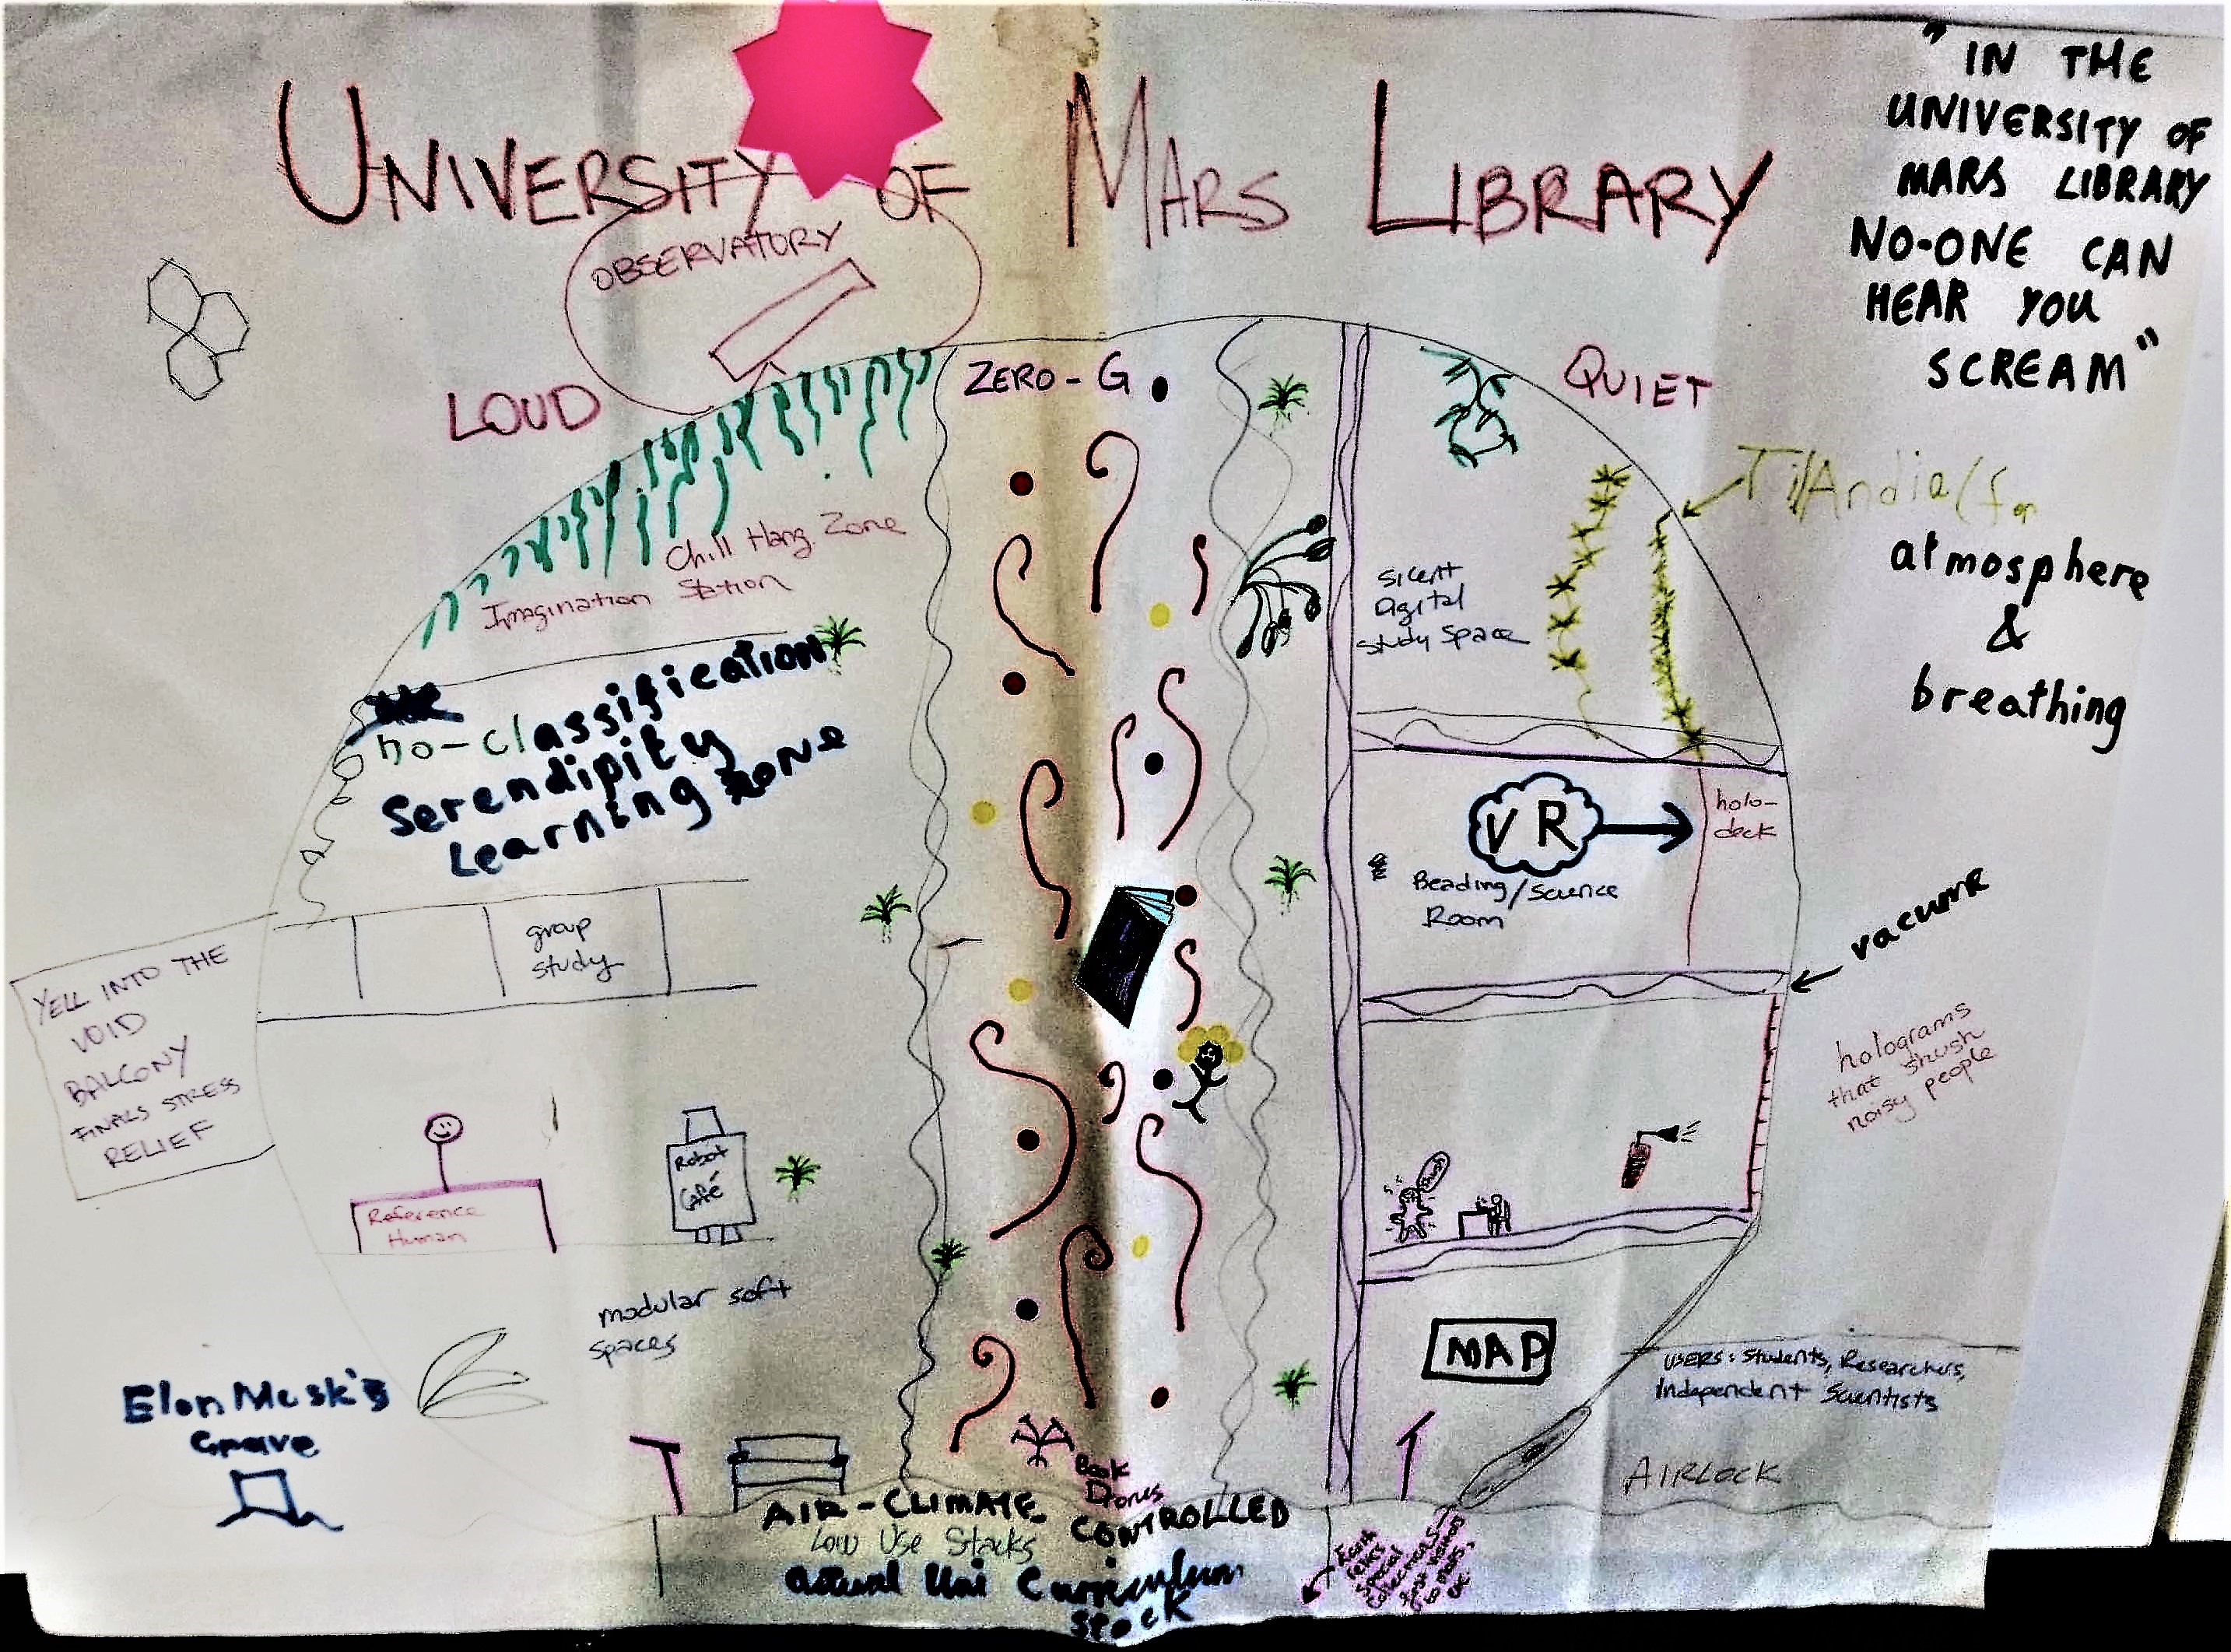 University of Mars Library